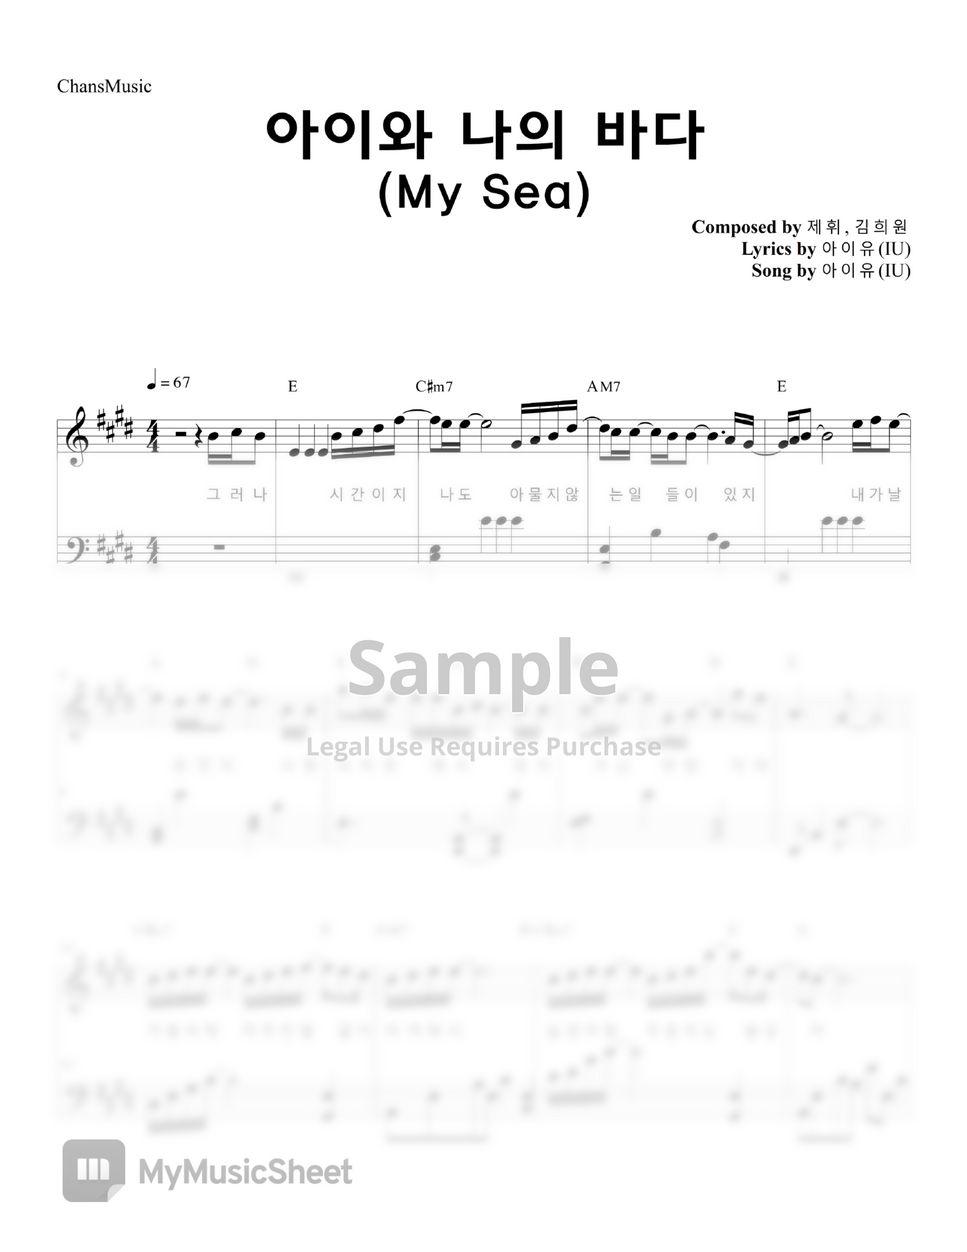 IU (아이유) - My Sea (아이와 나의 바다) (Easy Version) by ChansMusic